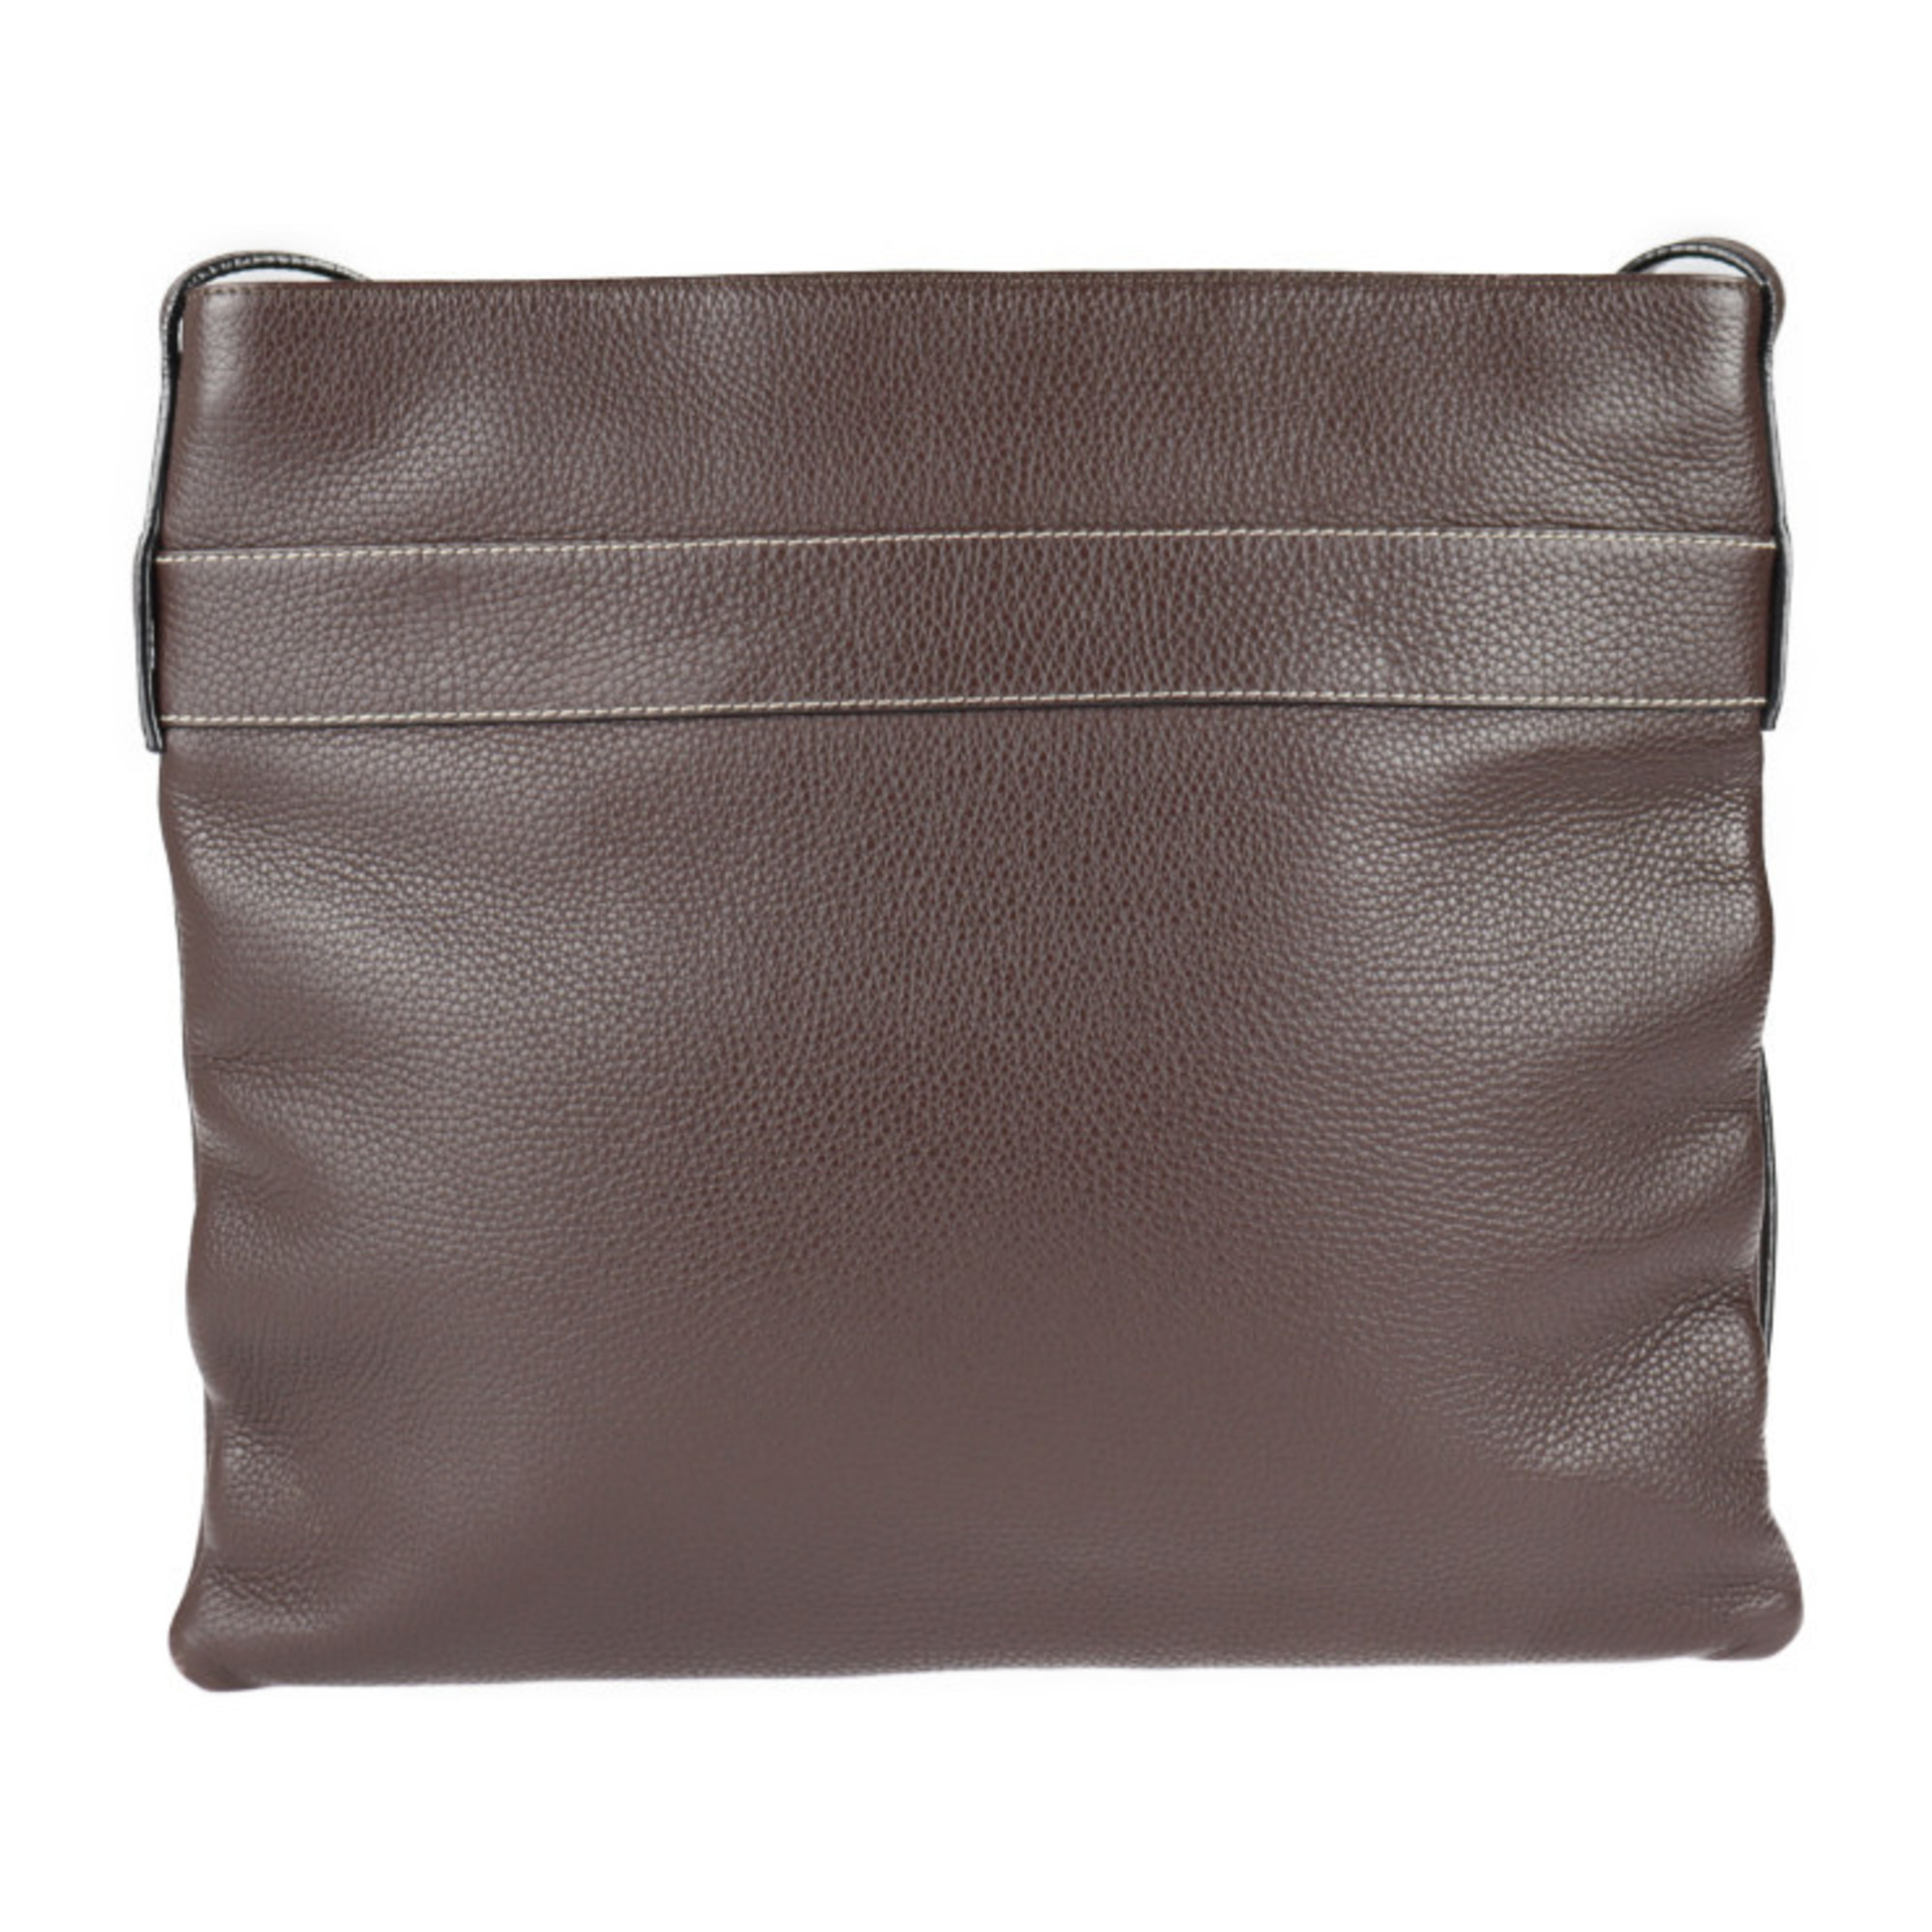 LOEWE Loewe shoulder bag leather brown large without gusset